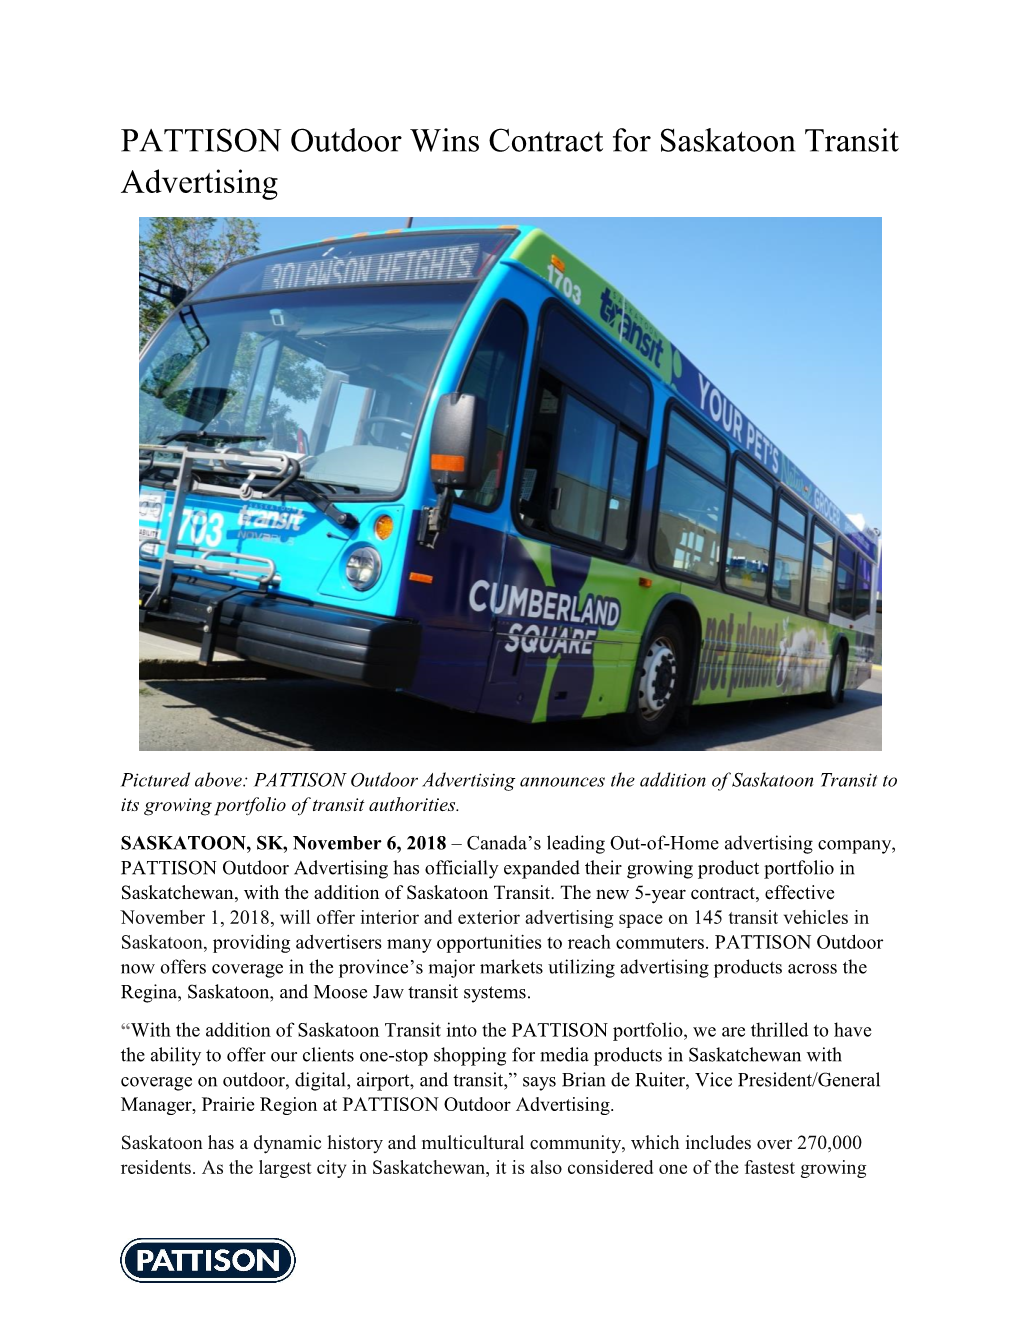 PATTISON Outdoor Wins Contract for Saskatoon Transit Advertising